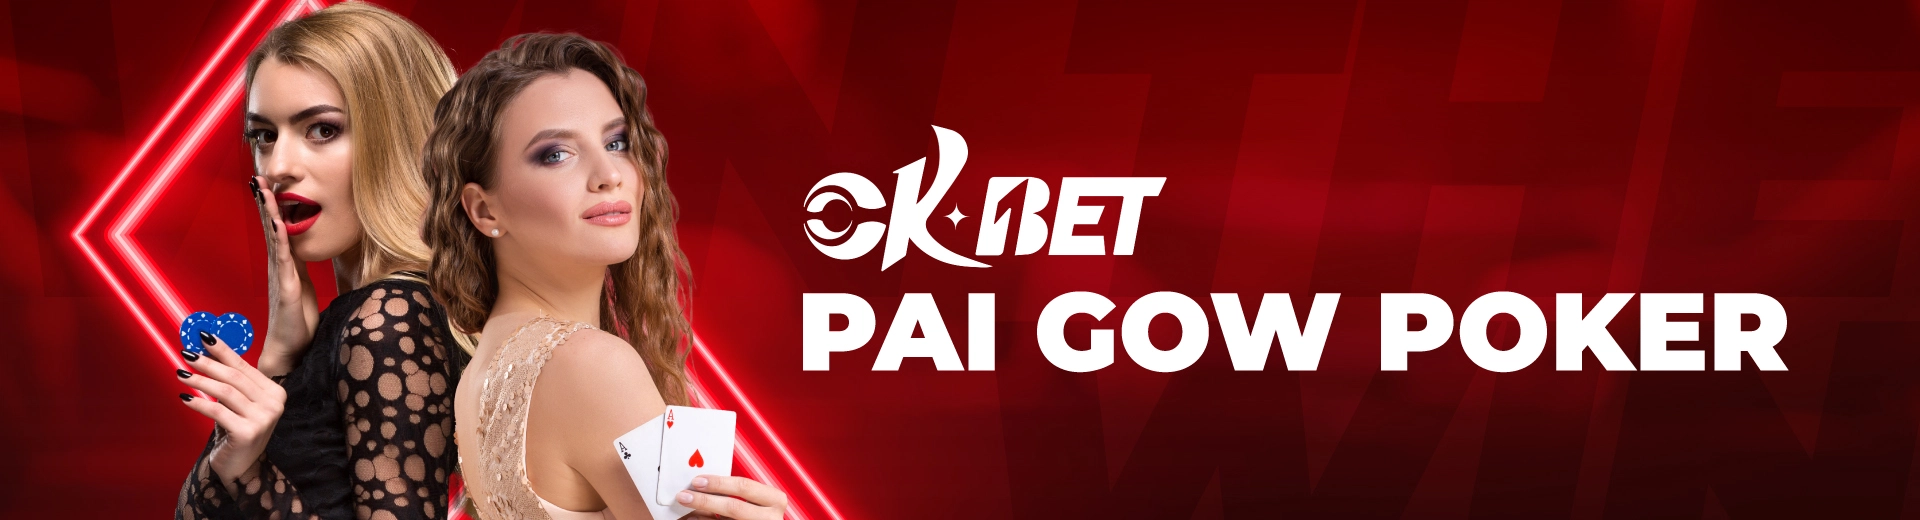 OKBET Pai Gow Poker